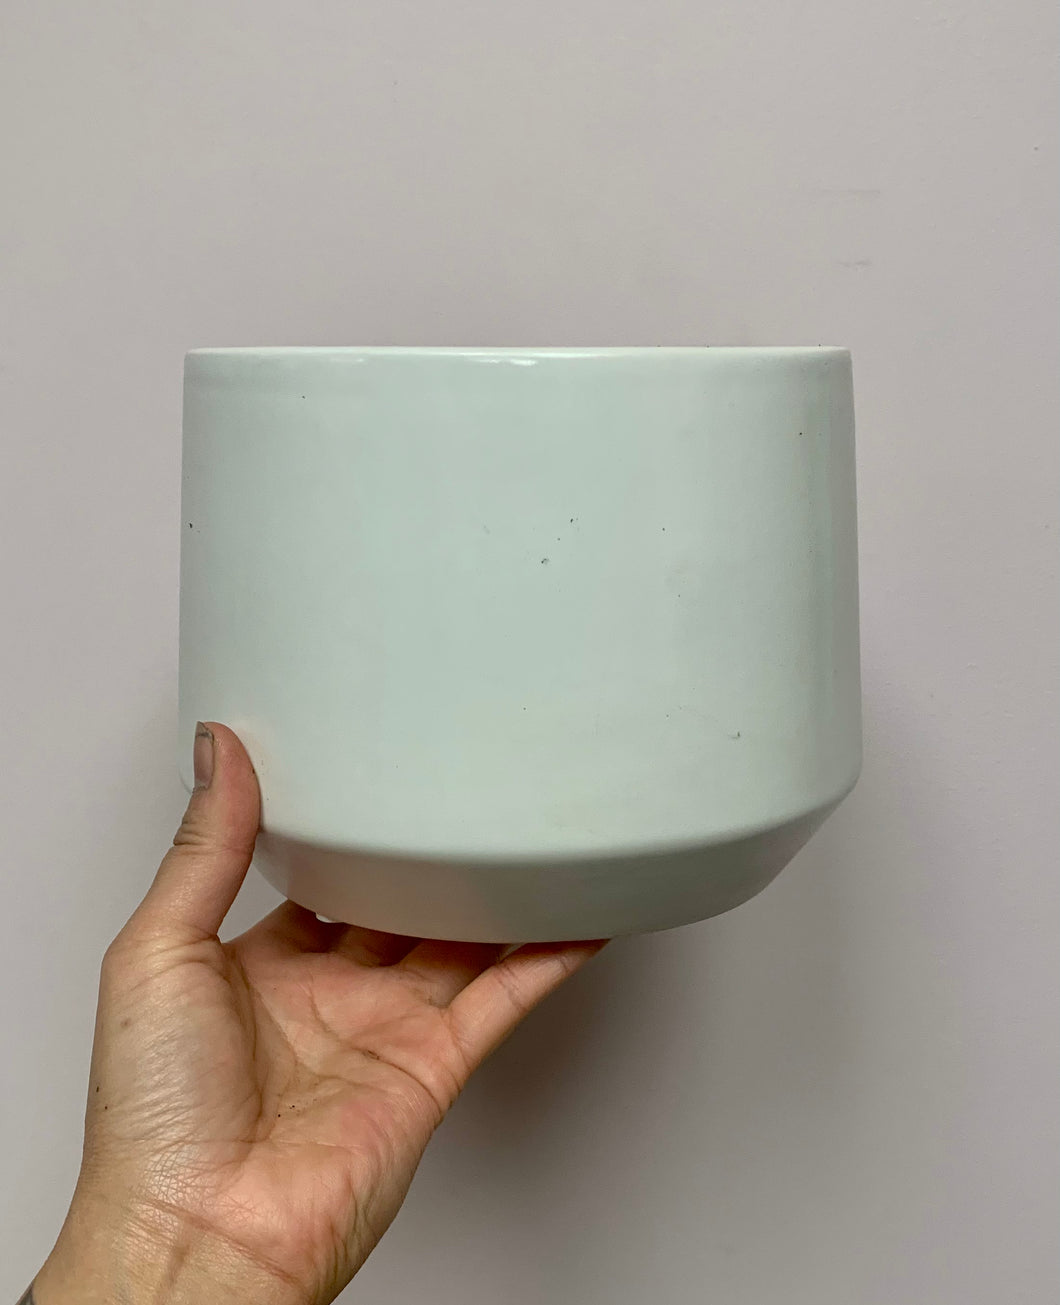 FREYA Matte Modern Cover Pot (6.5x5.5) available in black & white